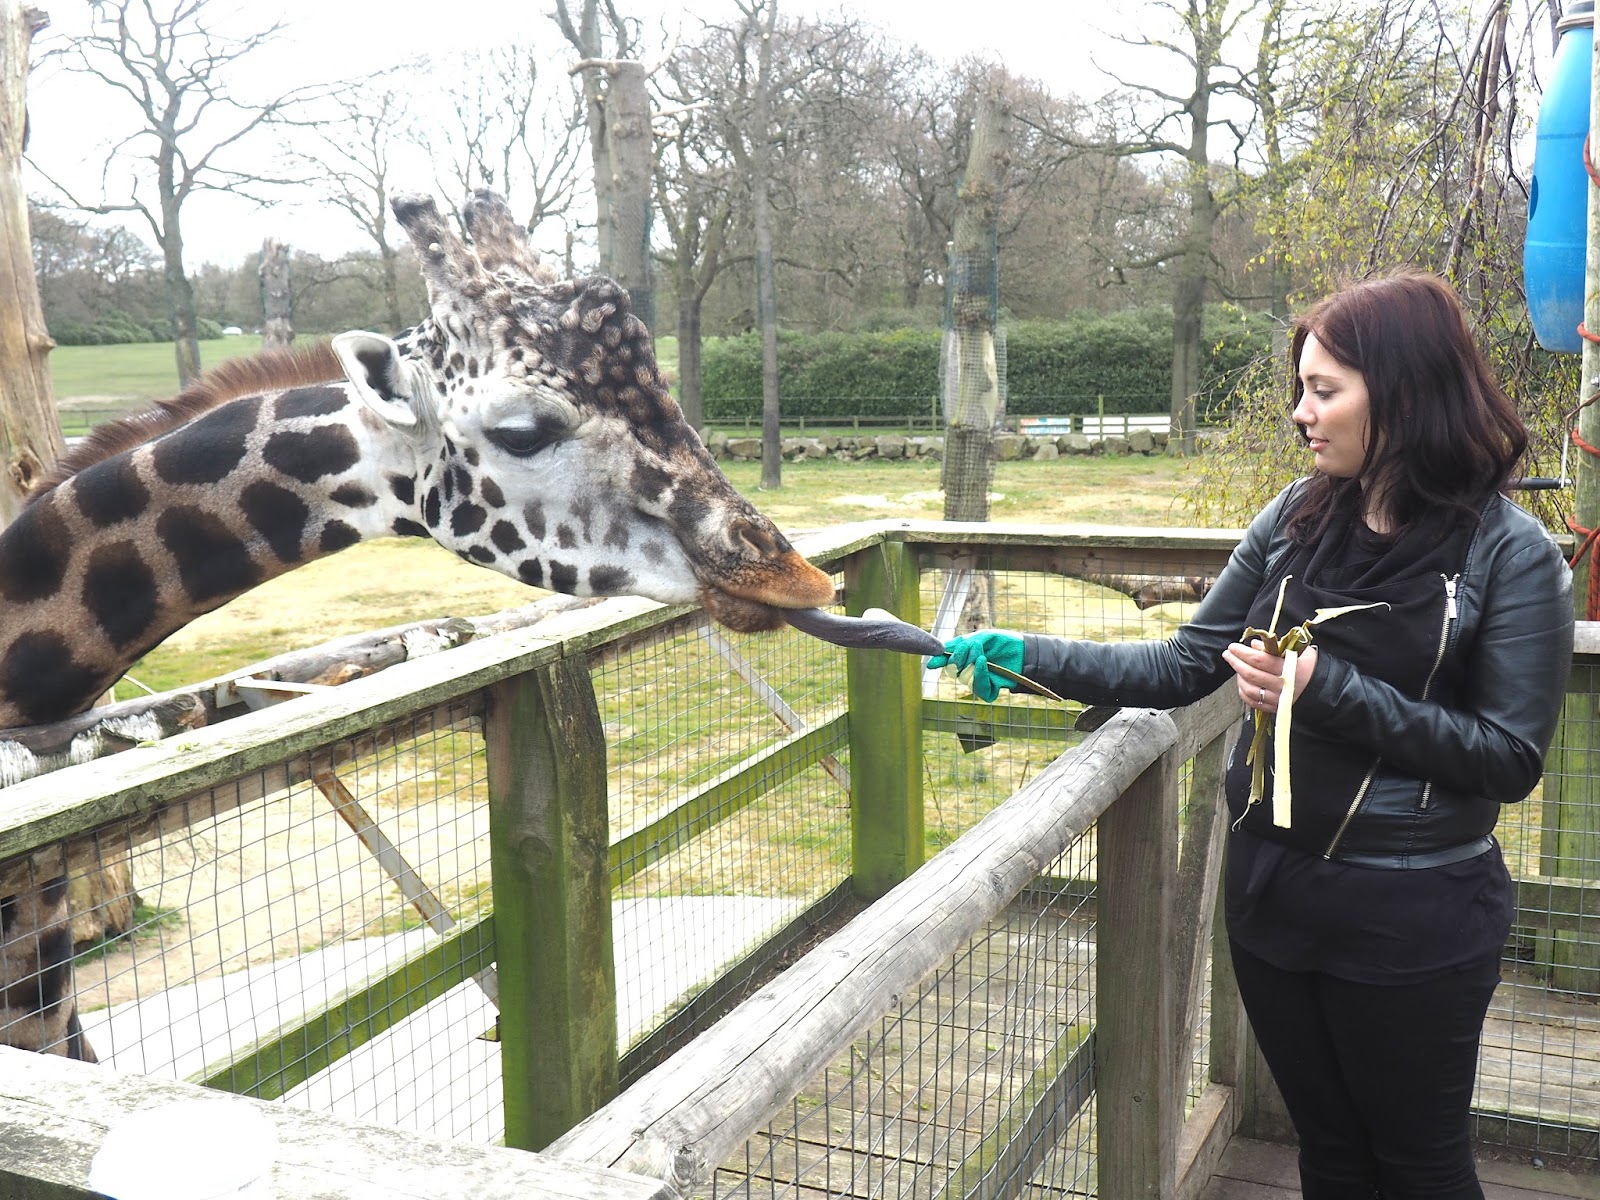 knowsley safari park feed giraffes